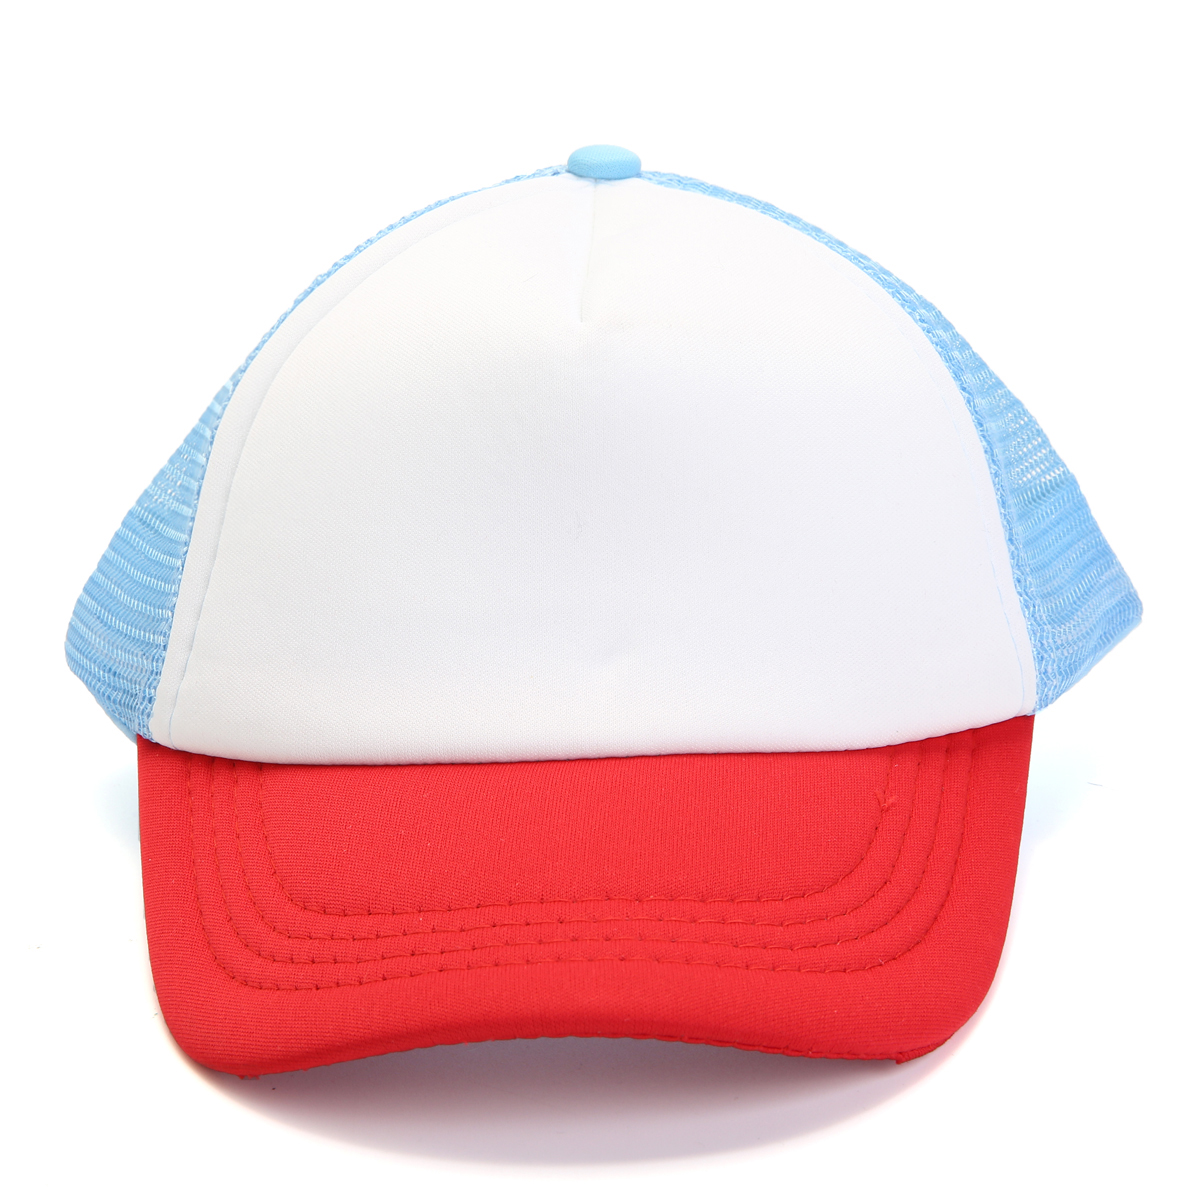 Adult-Kids-Children-Red-White-Blue-Adjustable-Baseball-Cap-Outdoor-Activity-Sunscreen-Sun-Hat-1470326